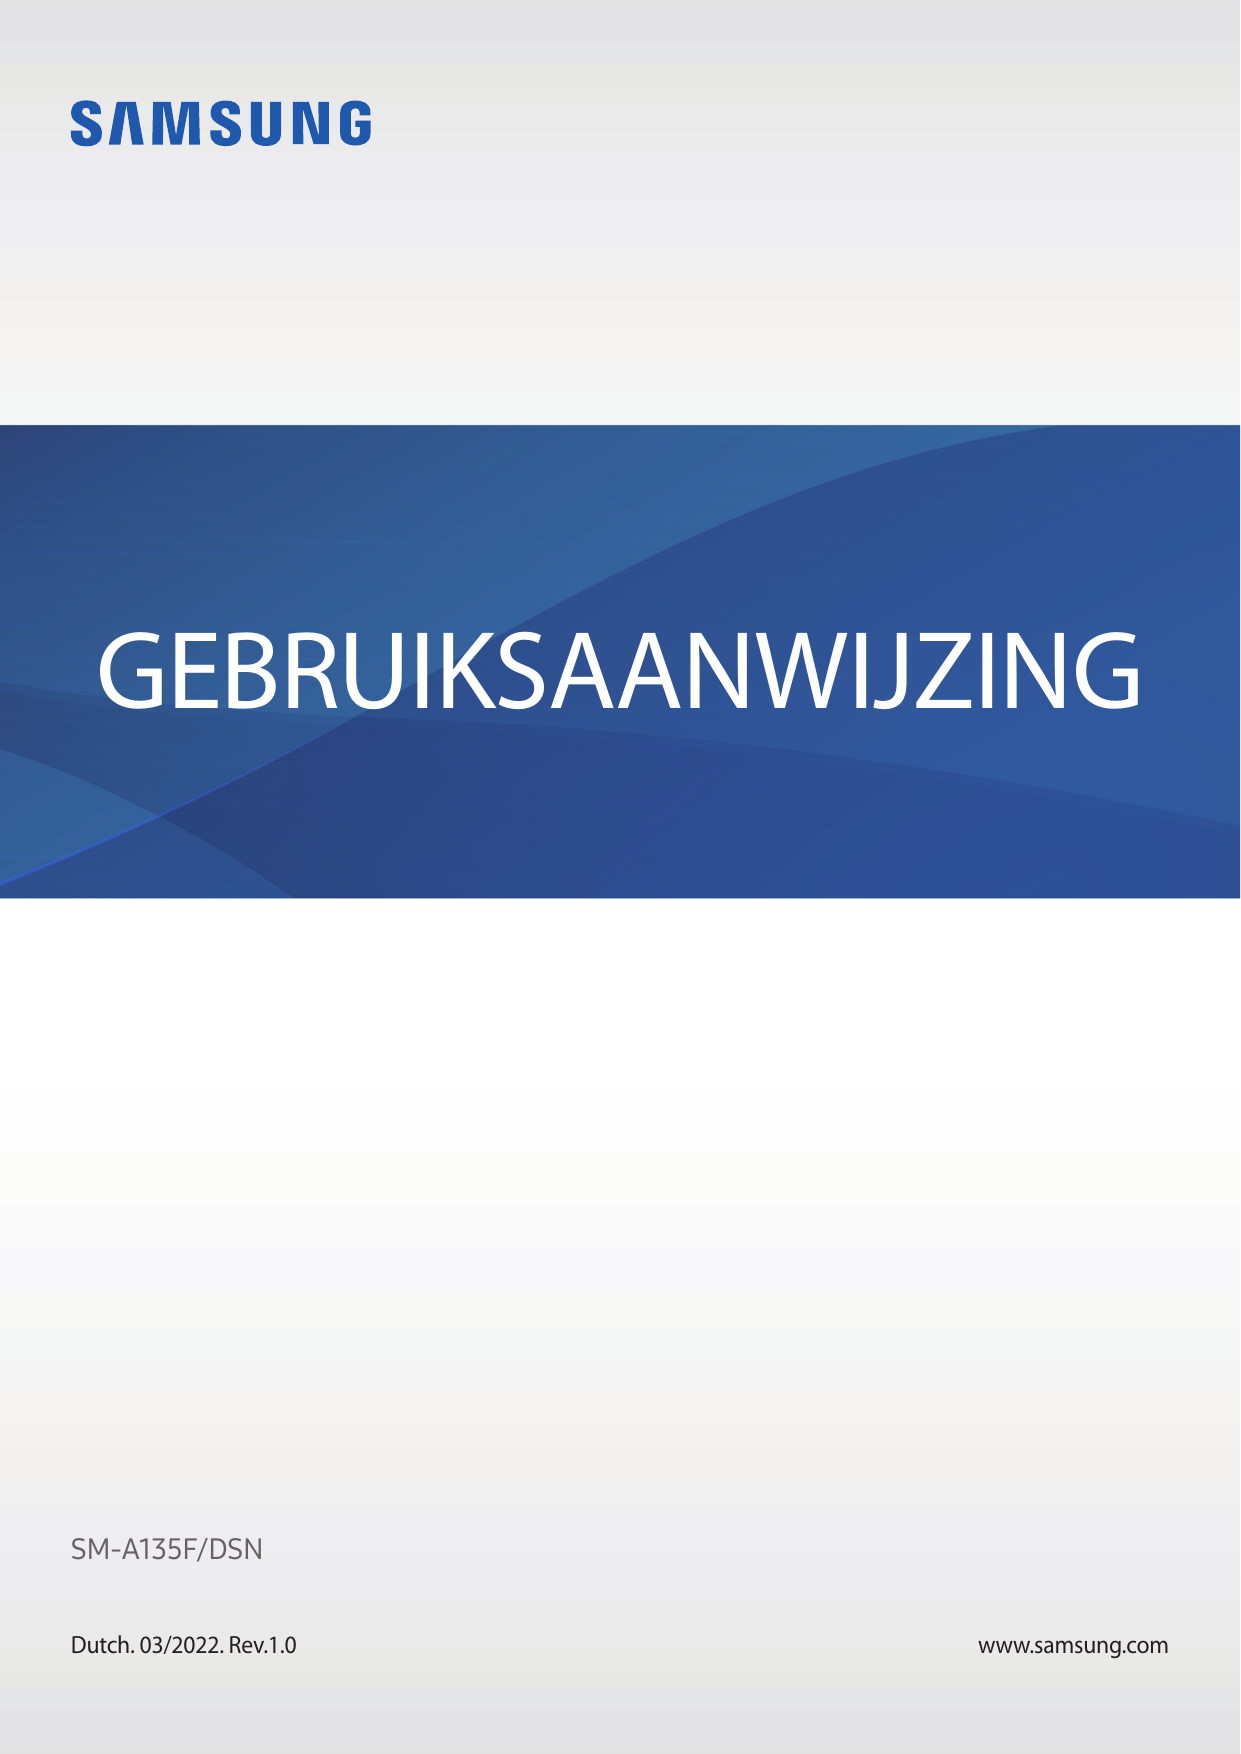 GEBRUIKSAANWIJZINGSM-A135F/DSNDutch. 03/2022. Rev.1.0www.samsung.com